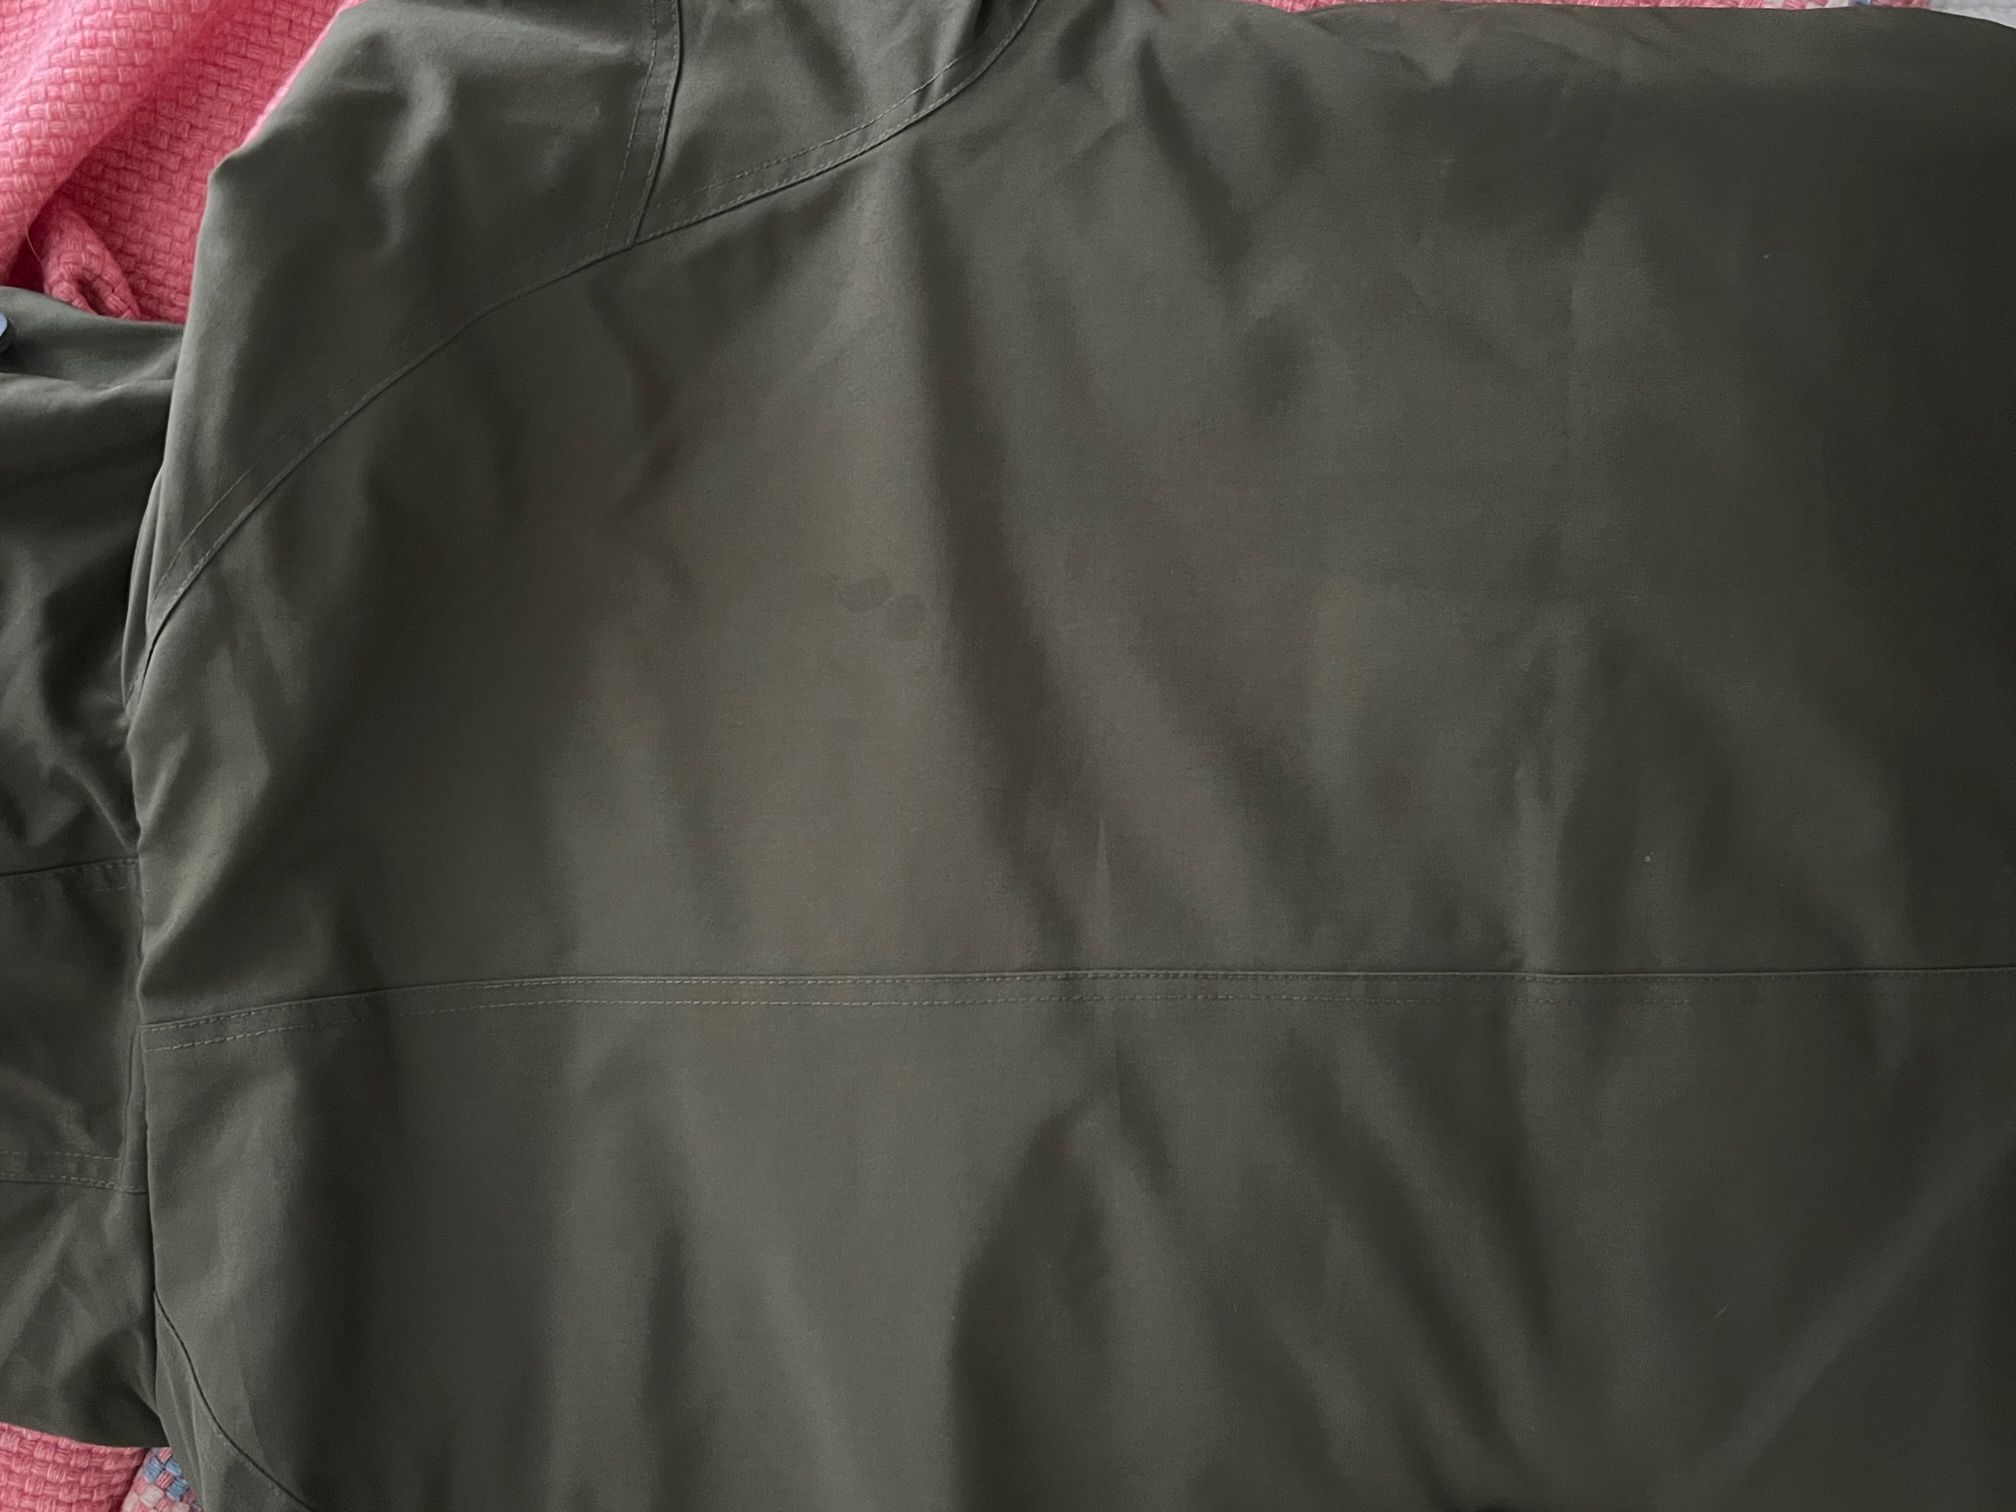 Penfield Kingman Jacket - Winter Coat Size US S / EU 44-46 / 1 - 9 Preview